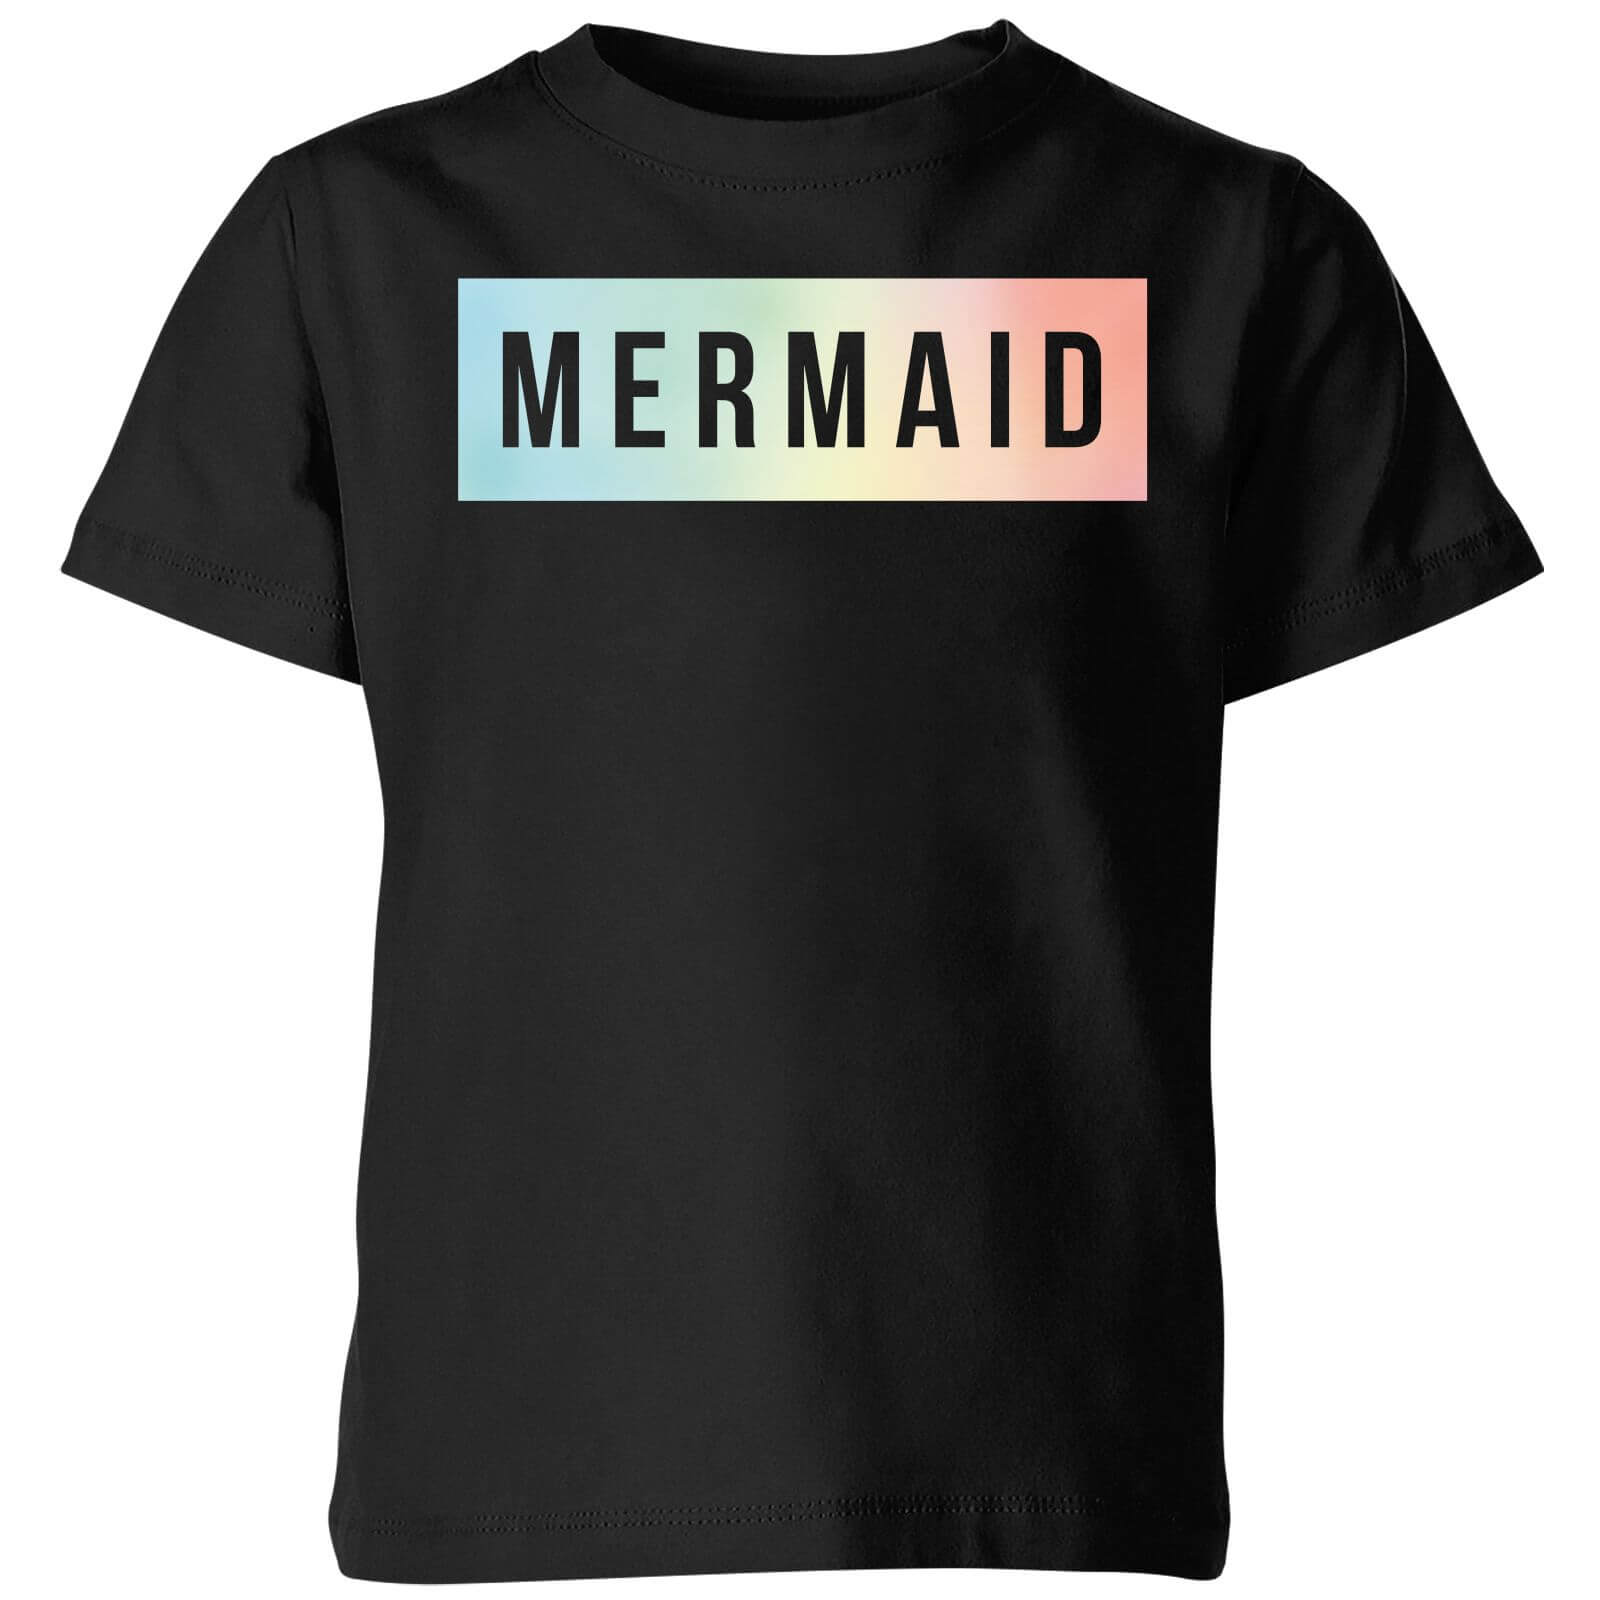 My Little Rascal Mermaid Kids' T-Shirt - Black - 3-4 Years - Black